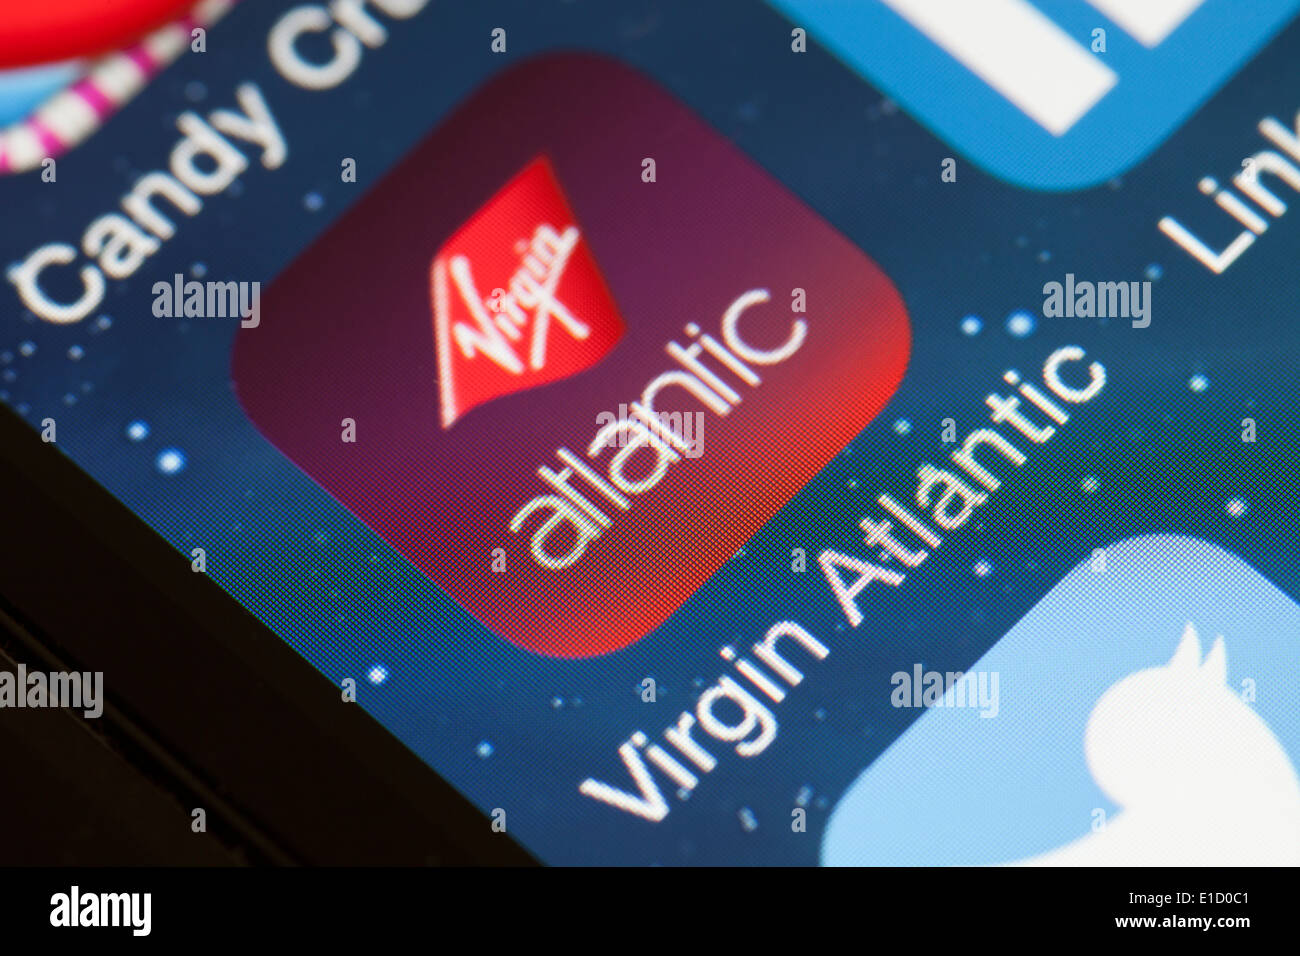 Virgin Atlantic app icon on mobile phone. Stock Photo